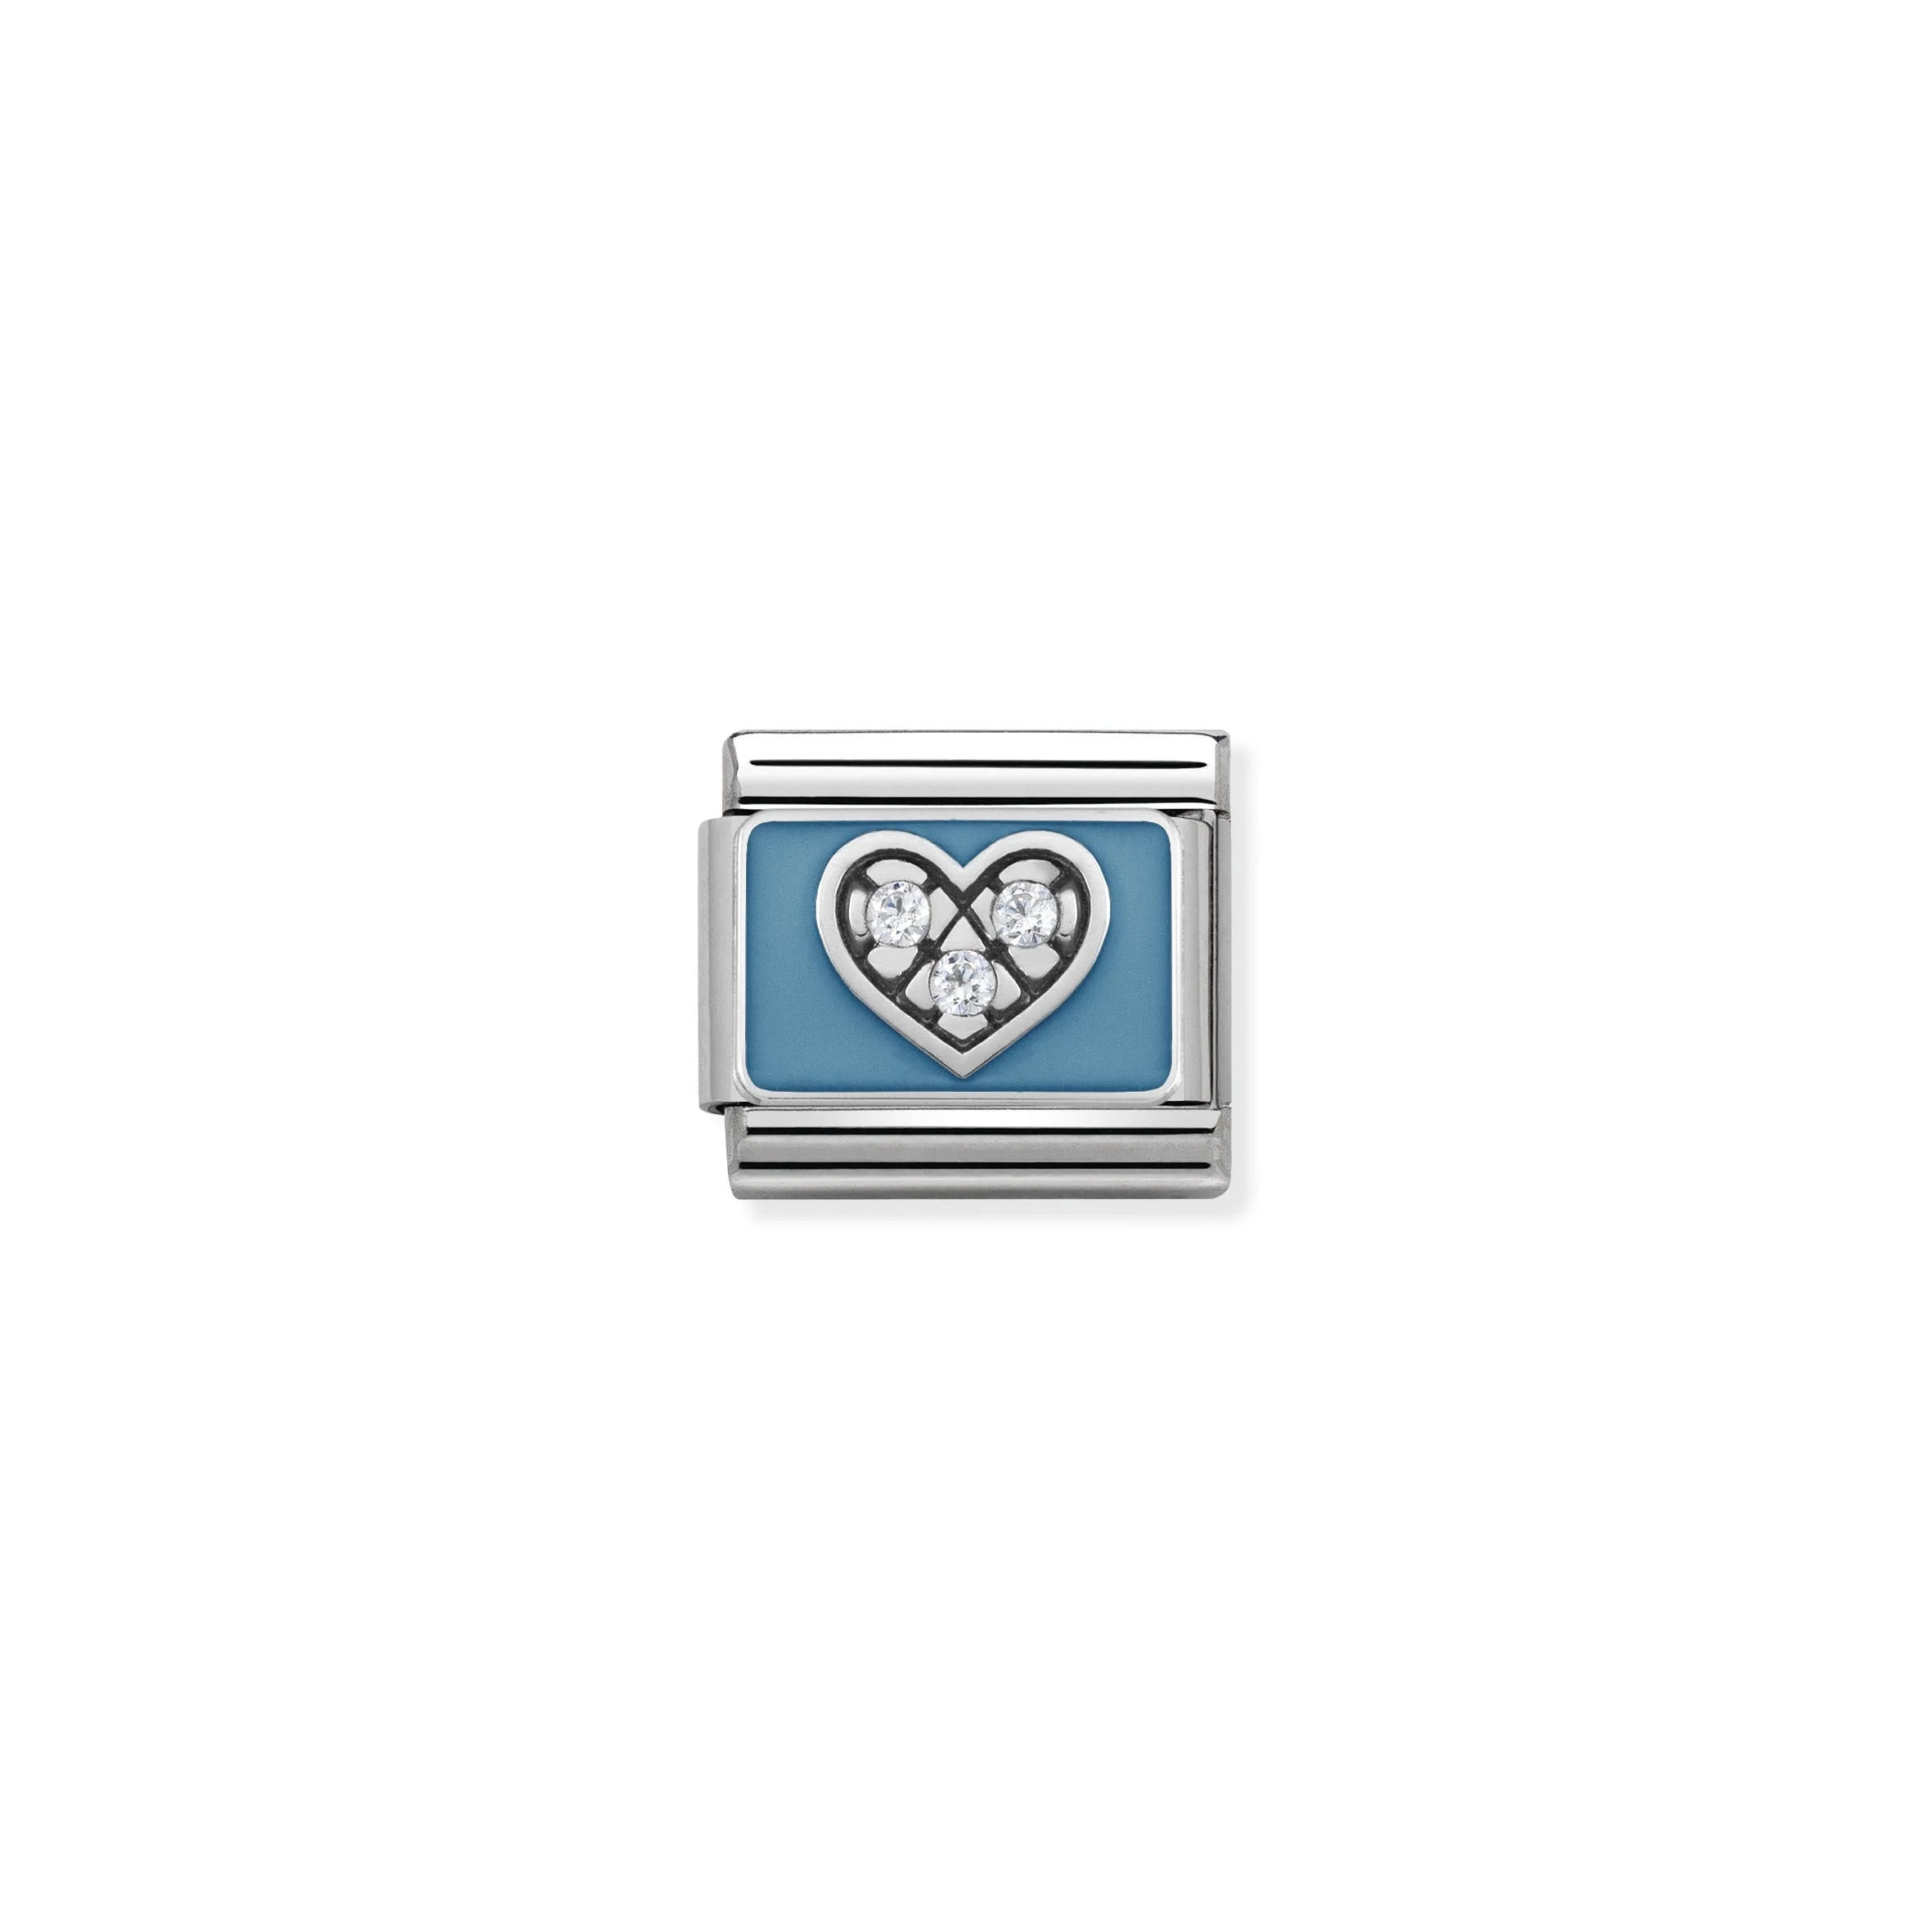 Light blue heart in silver, enamel and stones